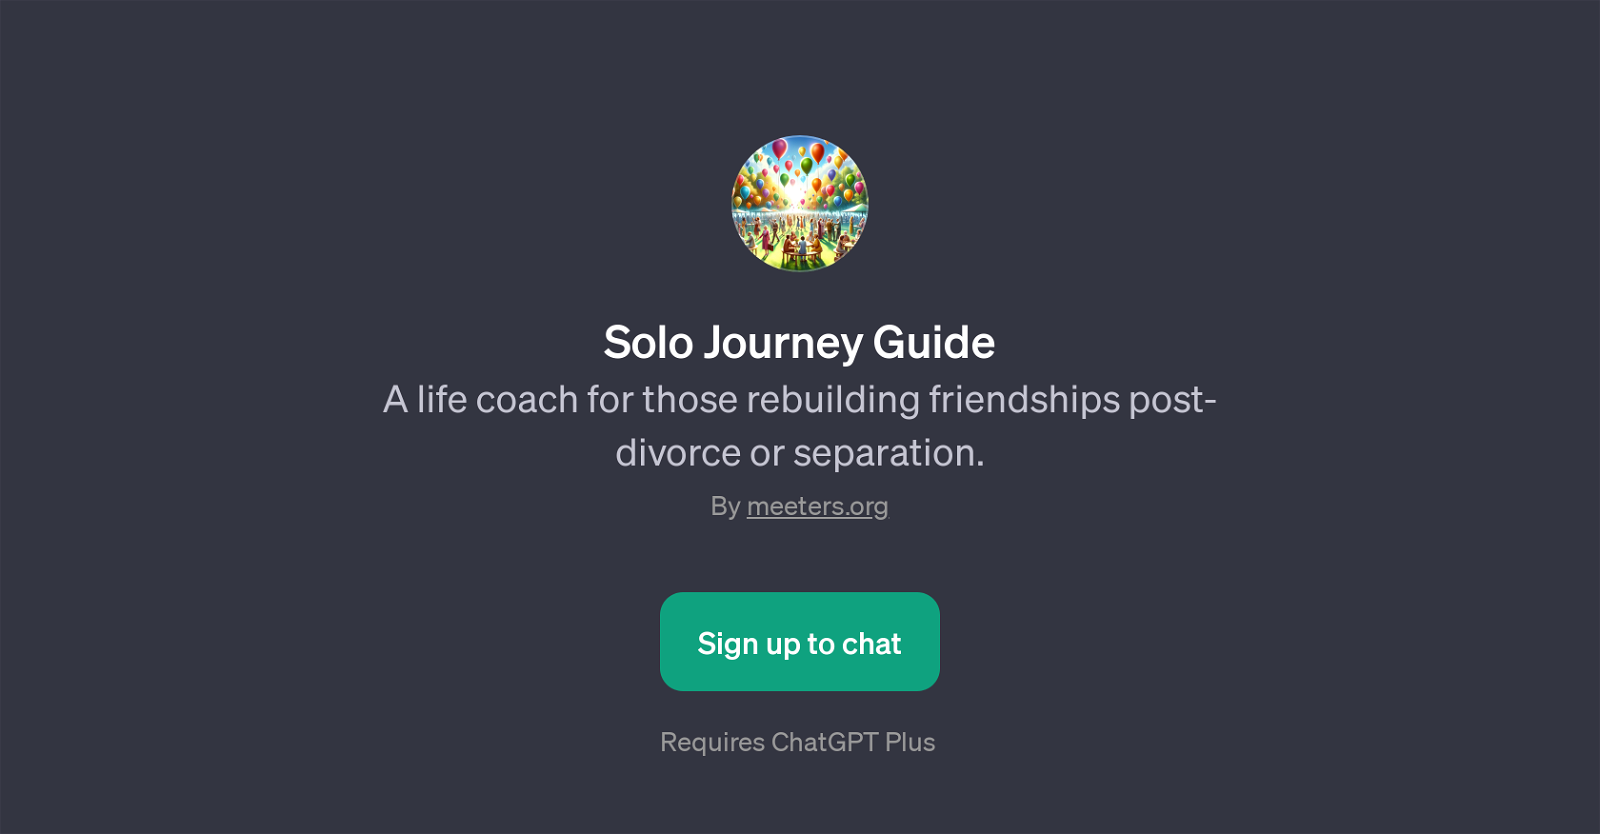 Solo Journey Guide website